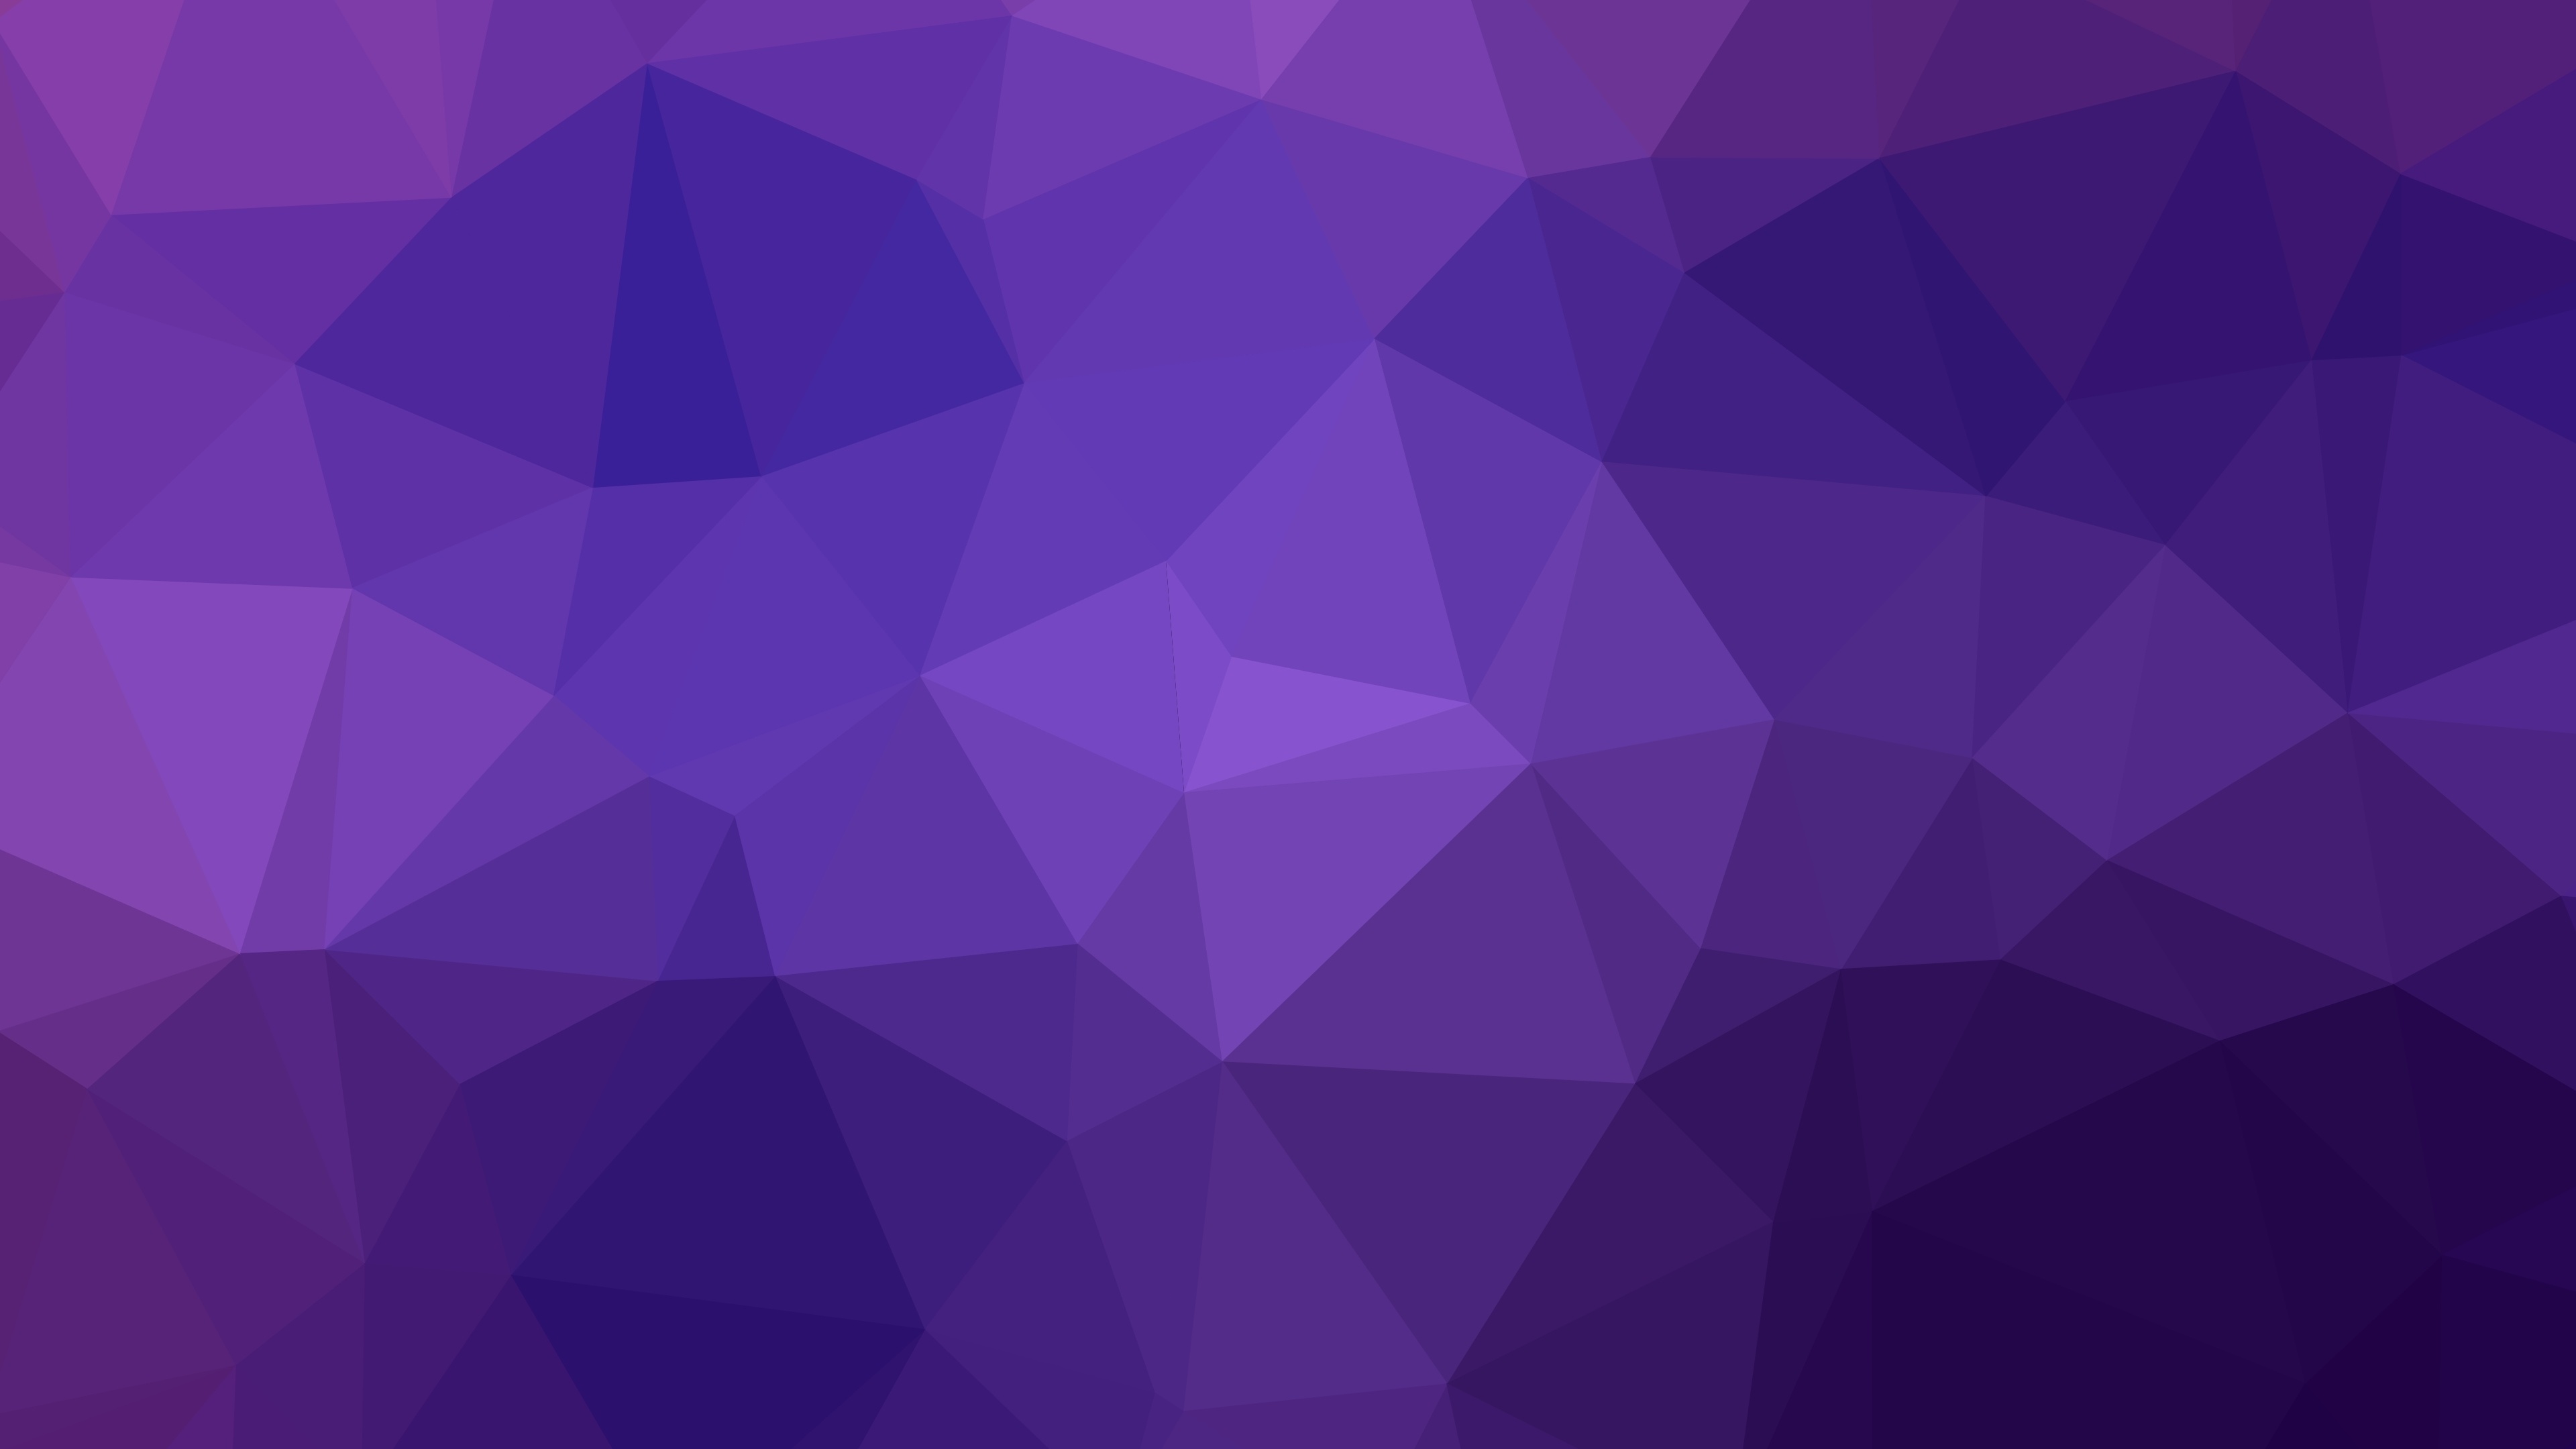 Download wallpaper 3840x2160 geometry, triangles, gradient, purple,  abstract 4k wallpaper, uhd wallpaper, 16:9 widescreen 3840x2160 hd  background, 6211